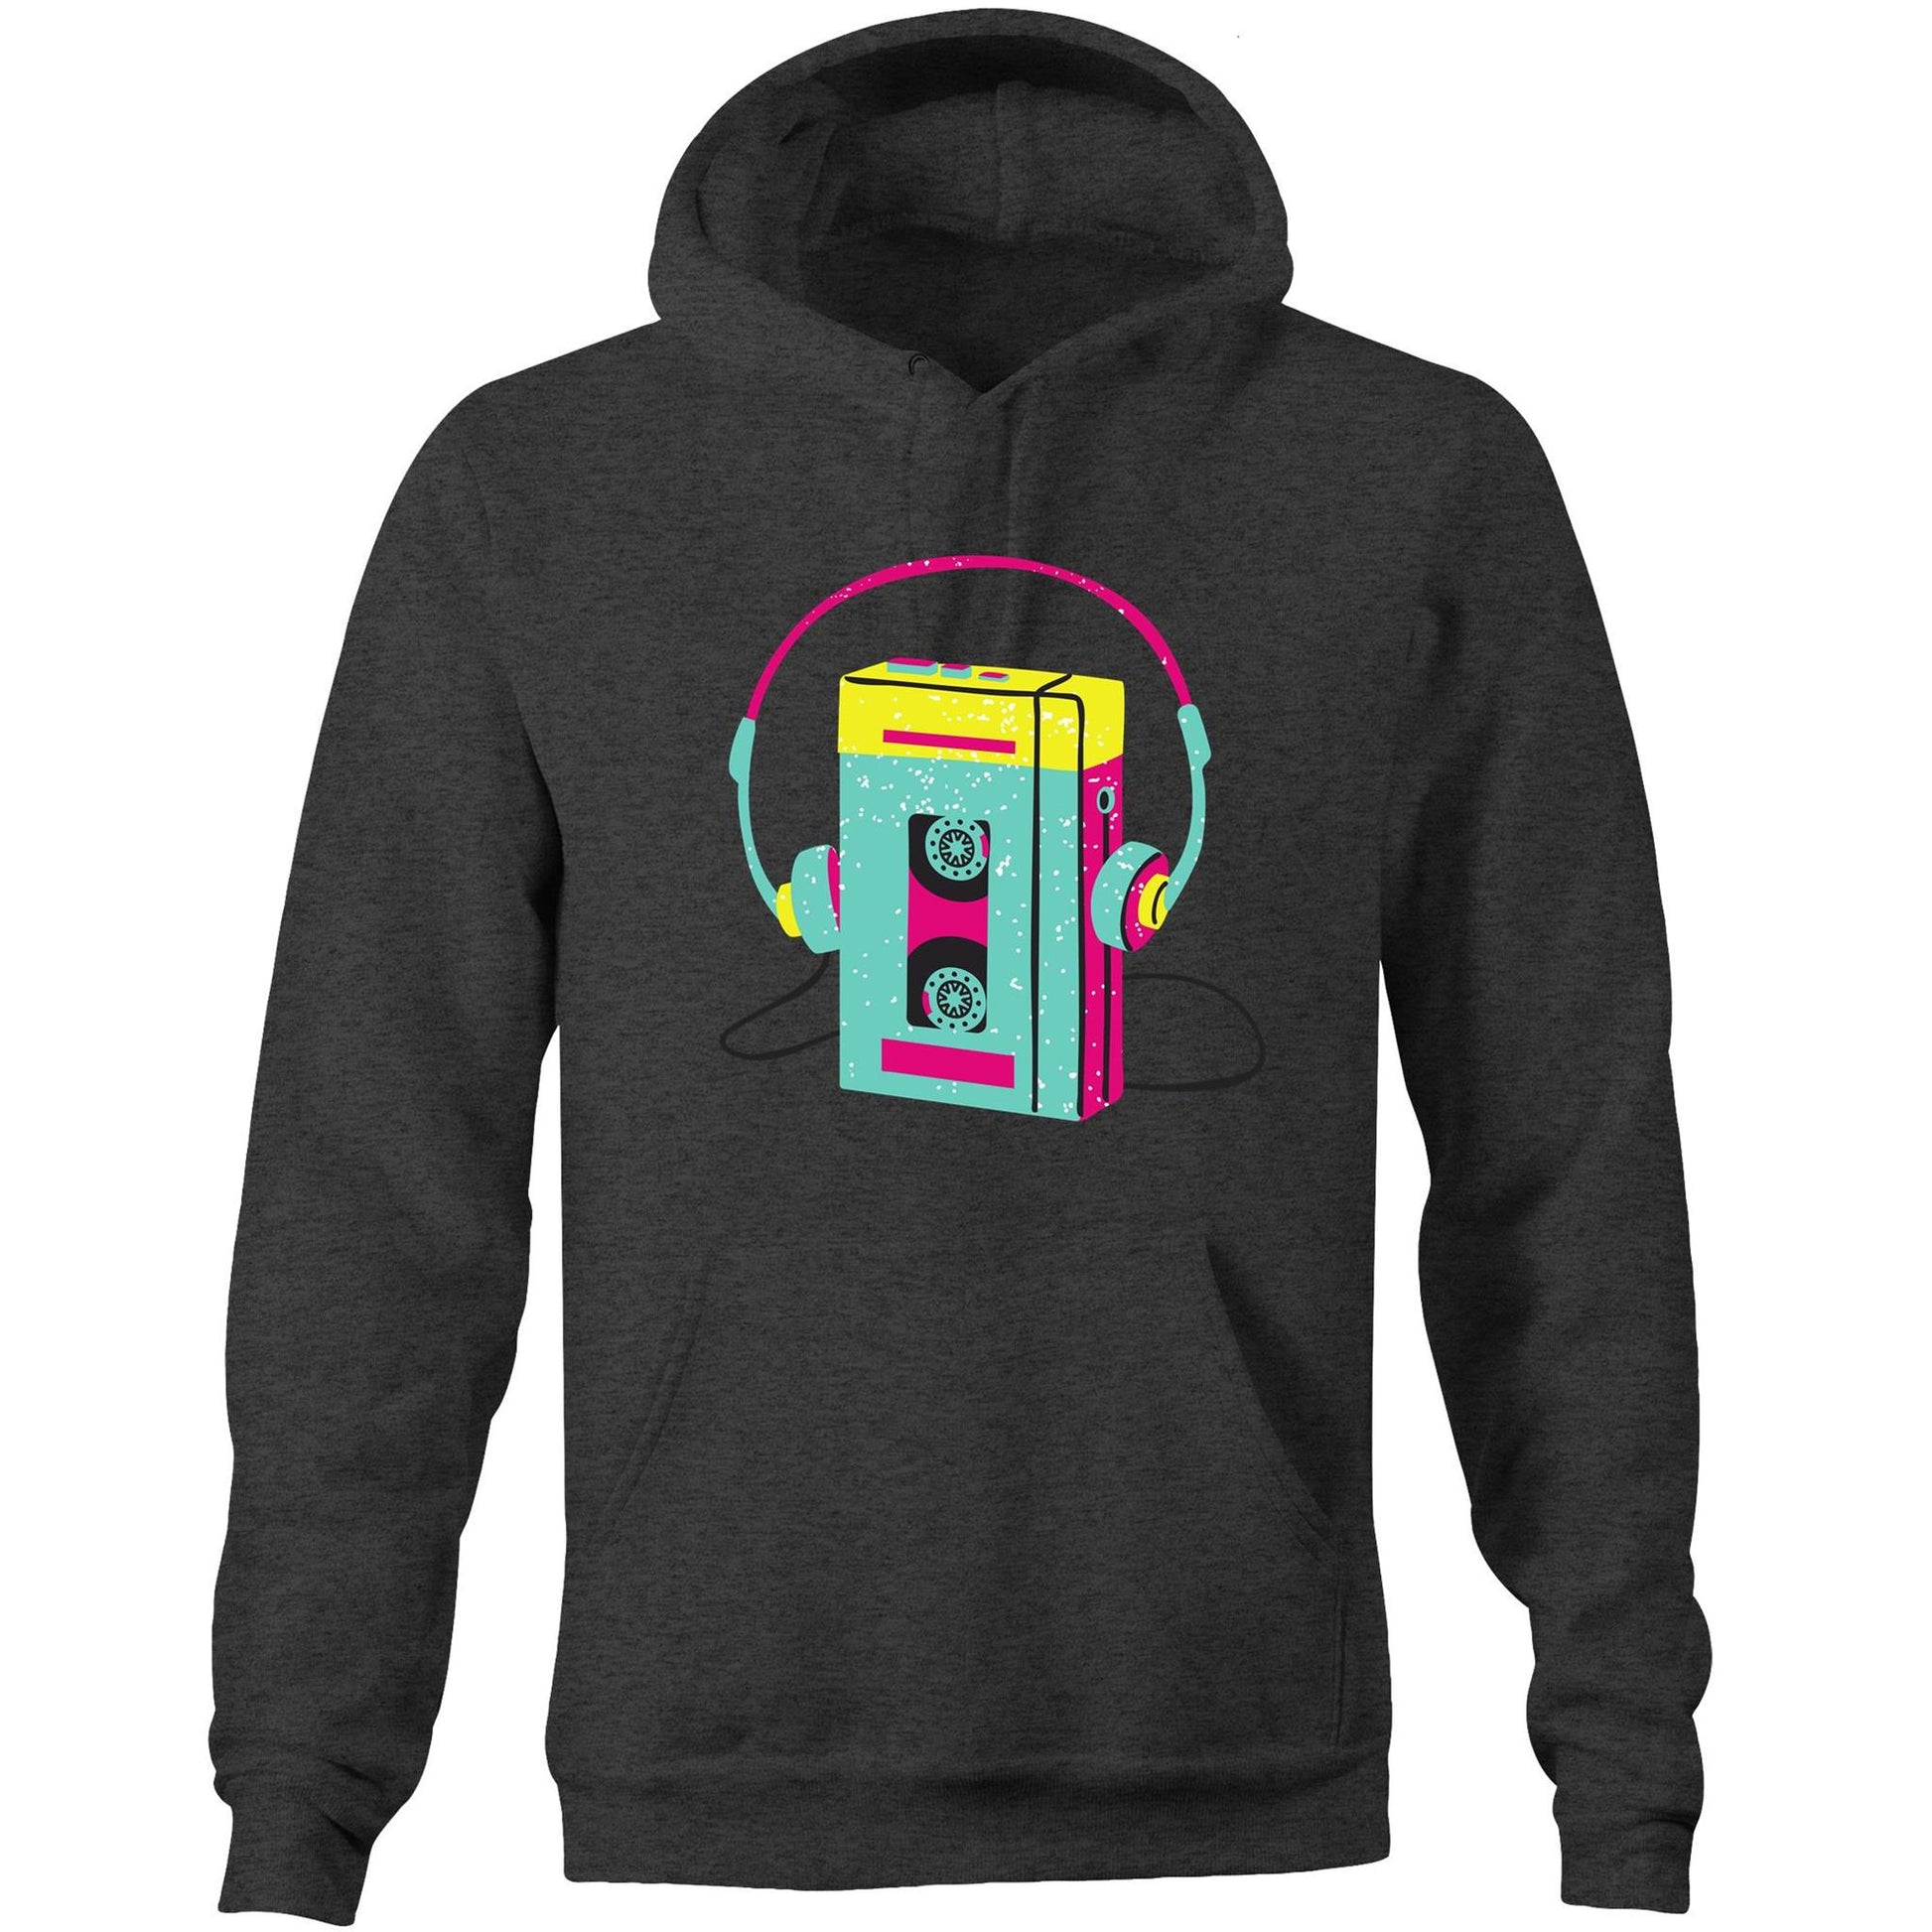 Wired For Sound, Music Player - Pocket Hoodie Sweatshirt Asphalt Marle Hoodie Mens Music Retro Womens